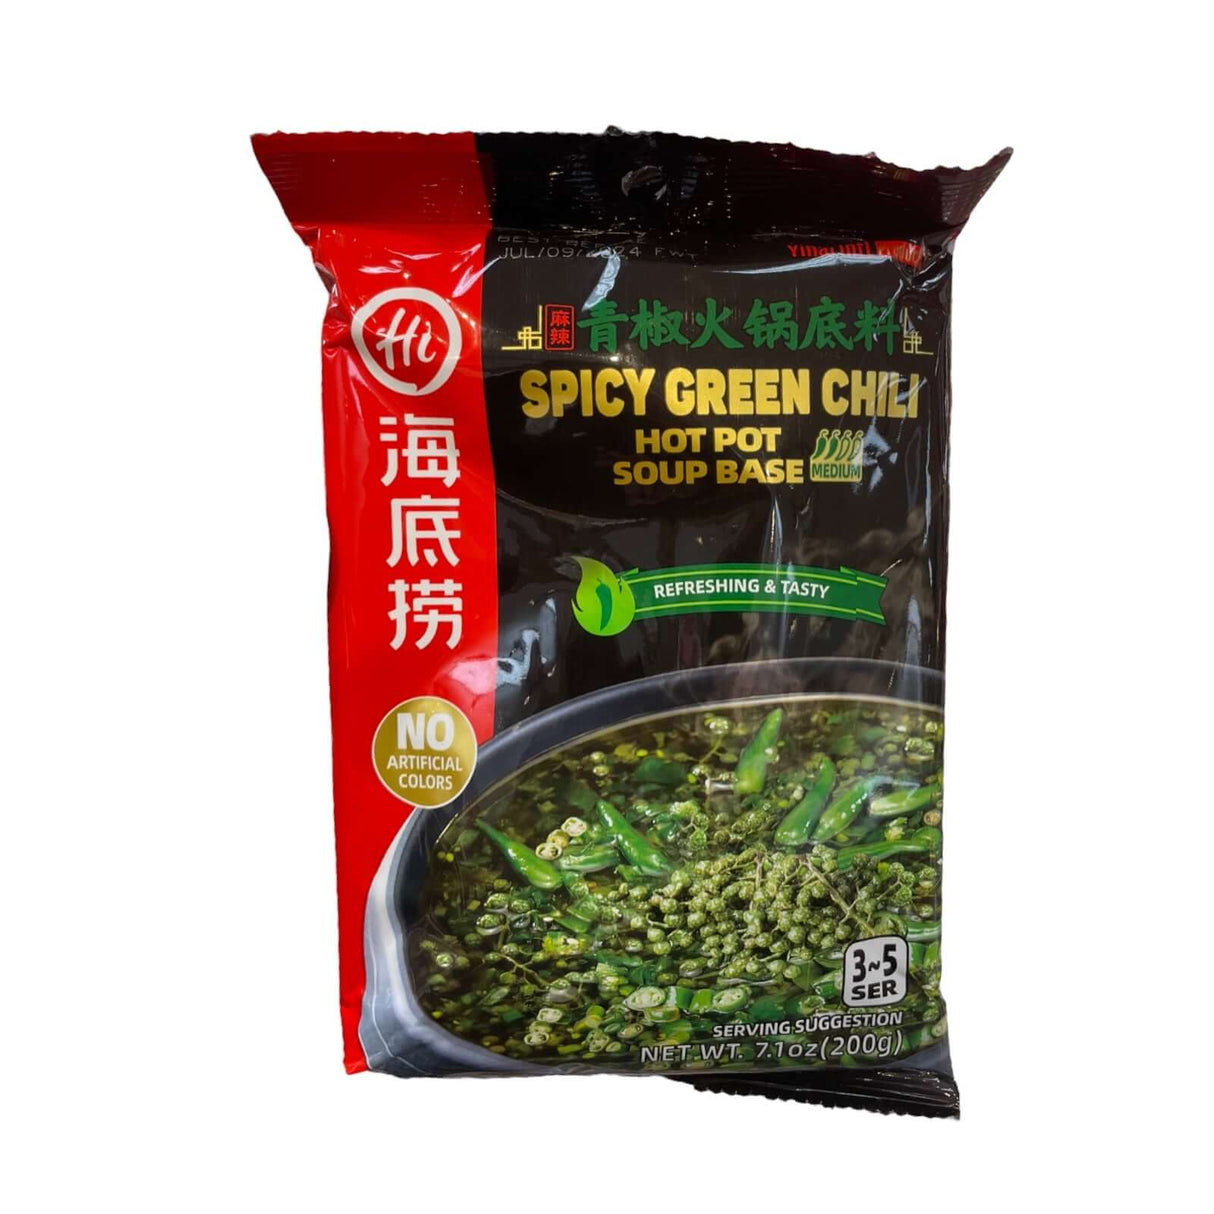 HAidilao Spicy Green Chili Hot Pot Soup Base Medium